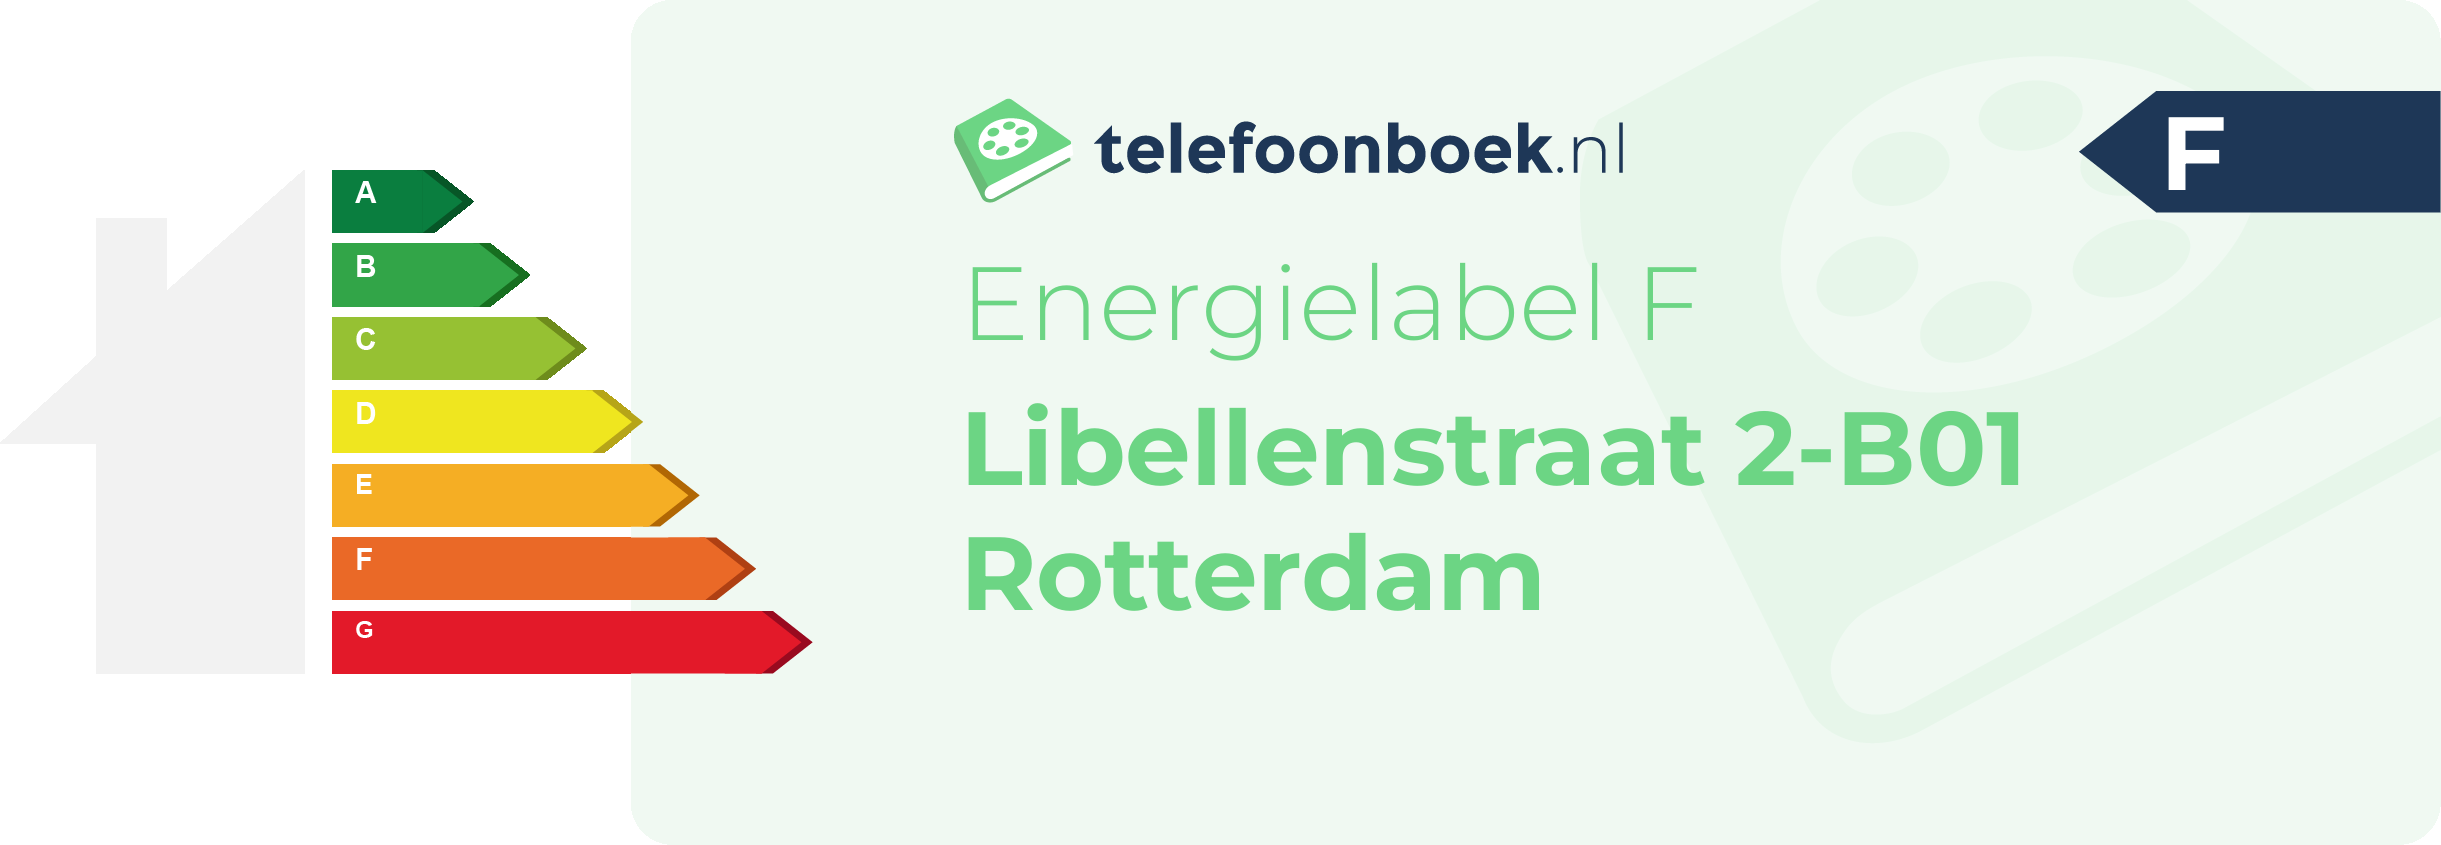 Energielabel Libellenstraat 2-B01 Rotterdam